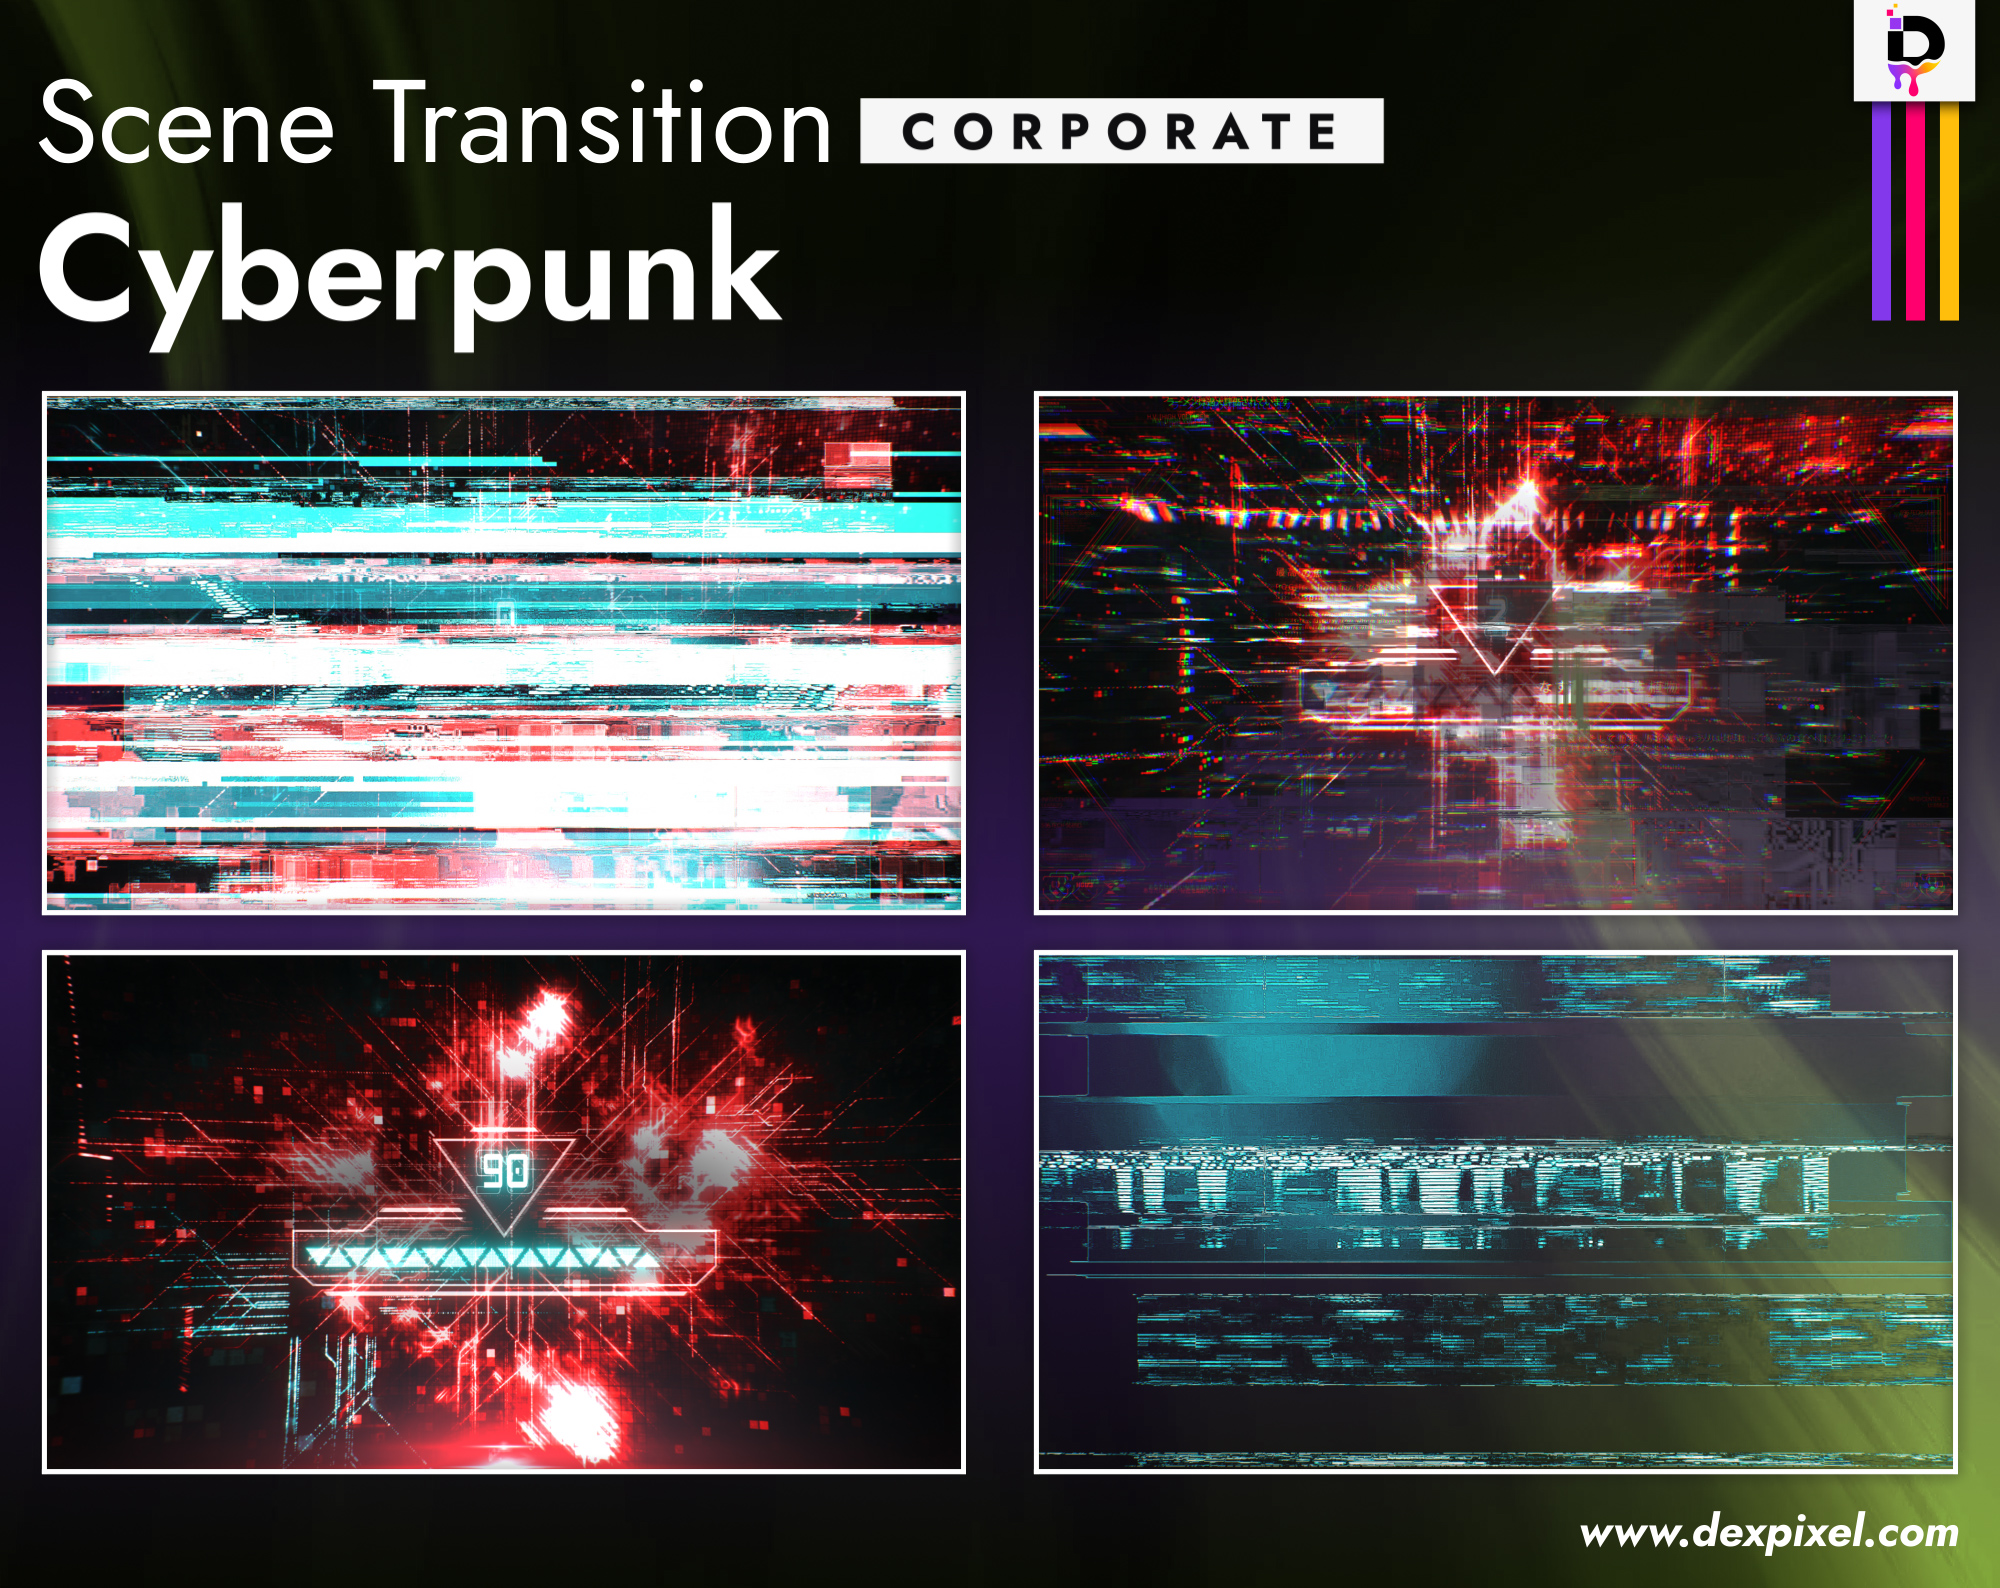 Scene Transition Dexpixel Thumbnail Cyberpunk Corporate